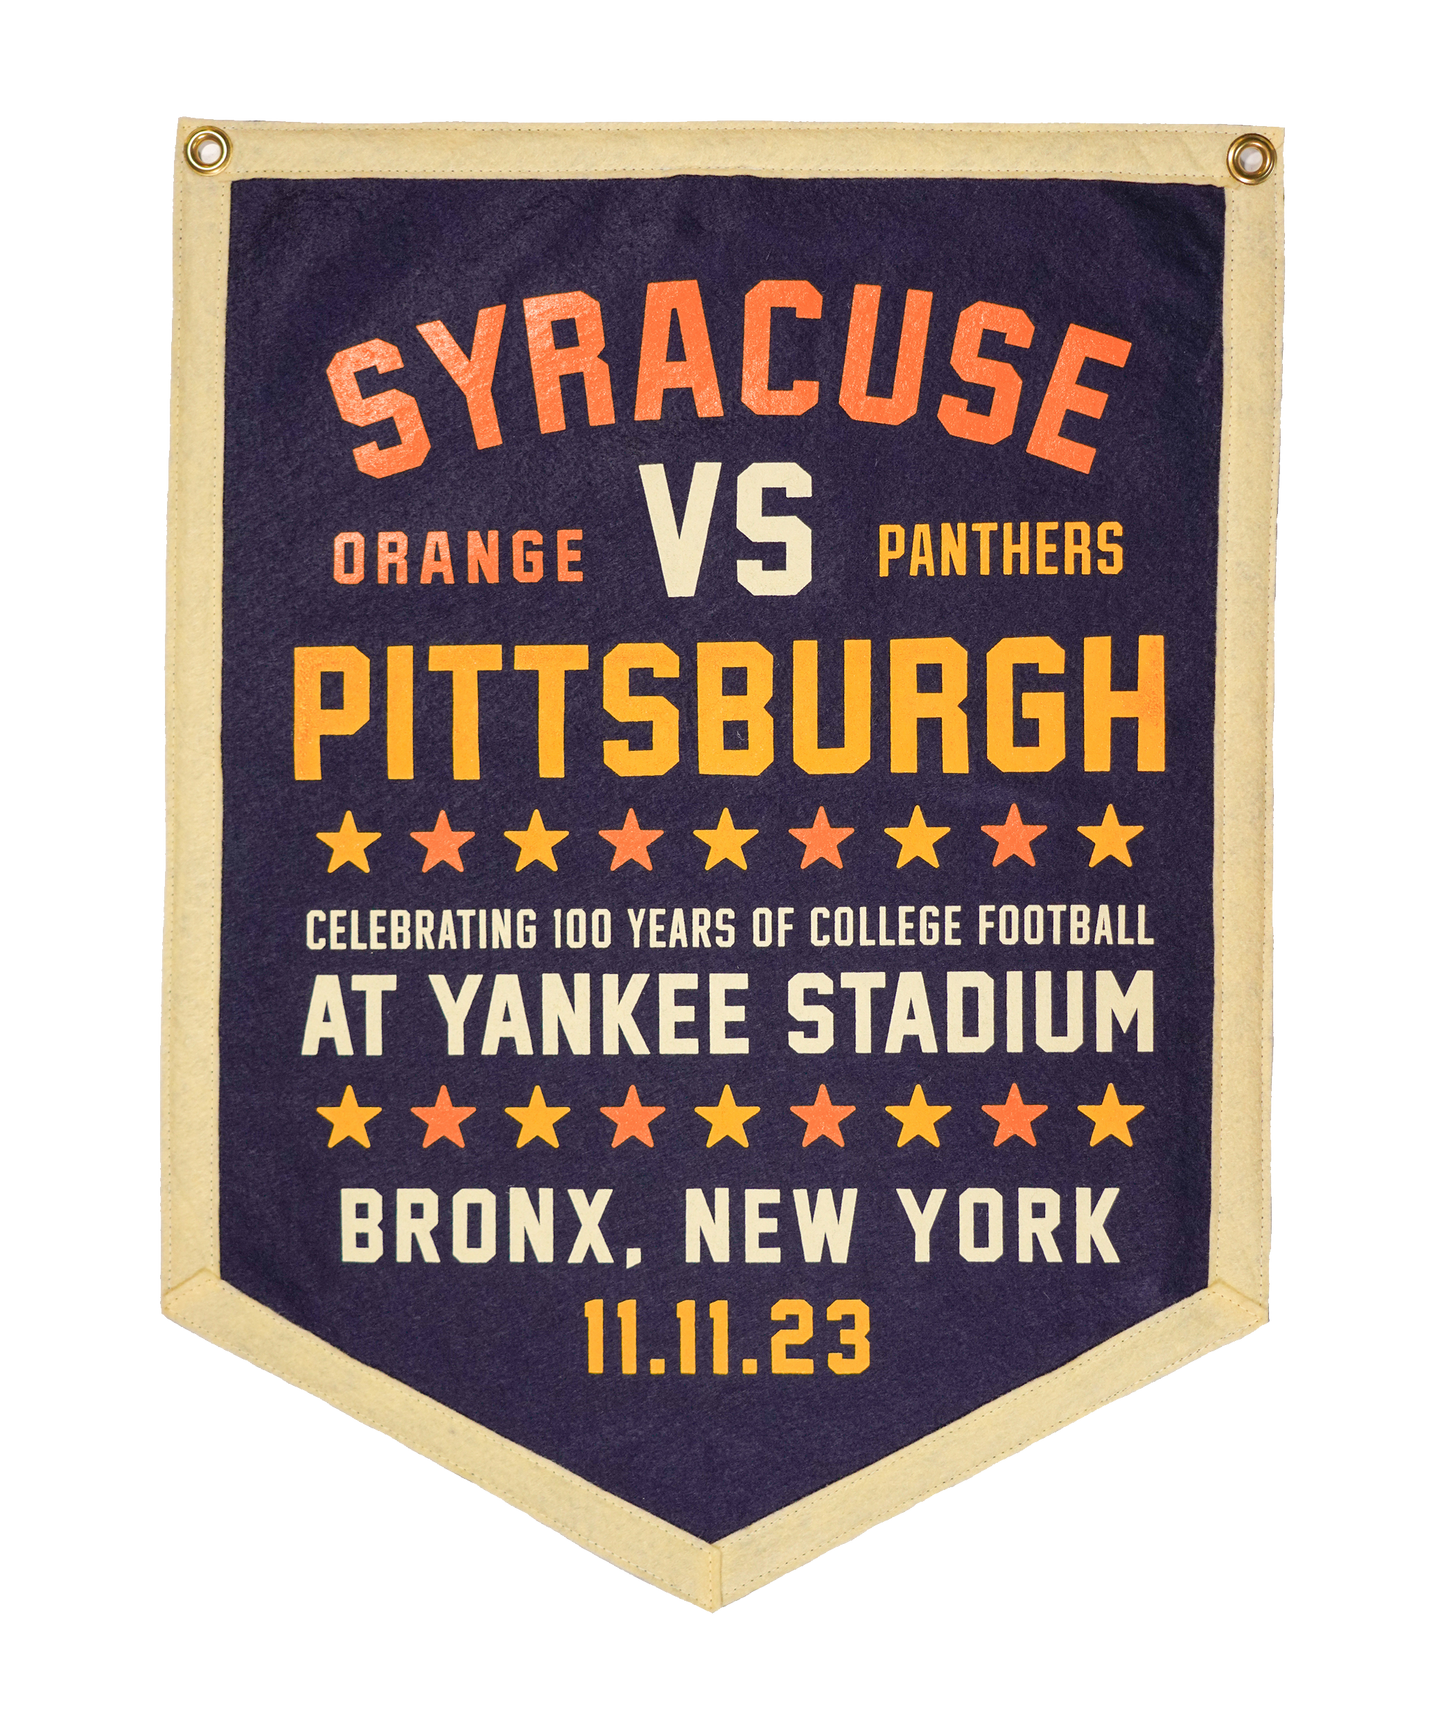 Pittsburgh vs Syracuse Commemorative Camp Flag